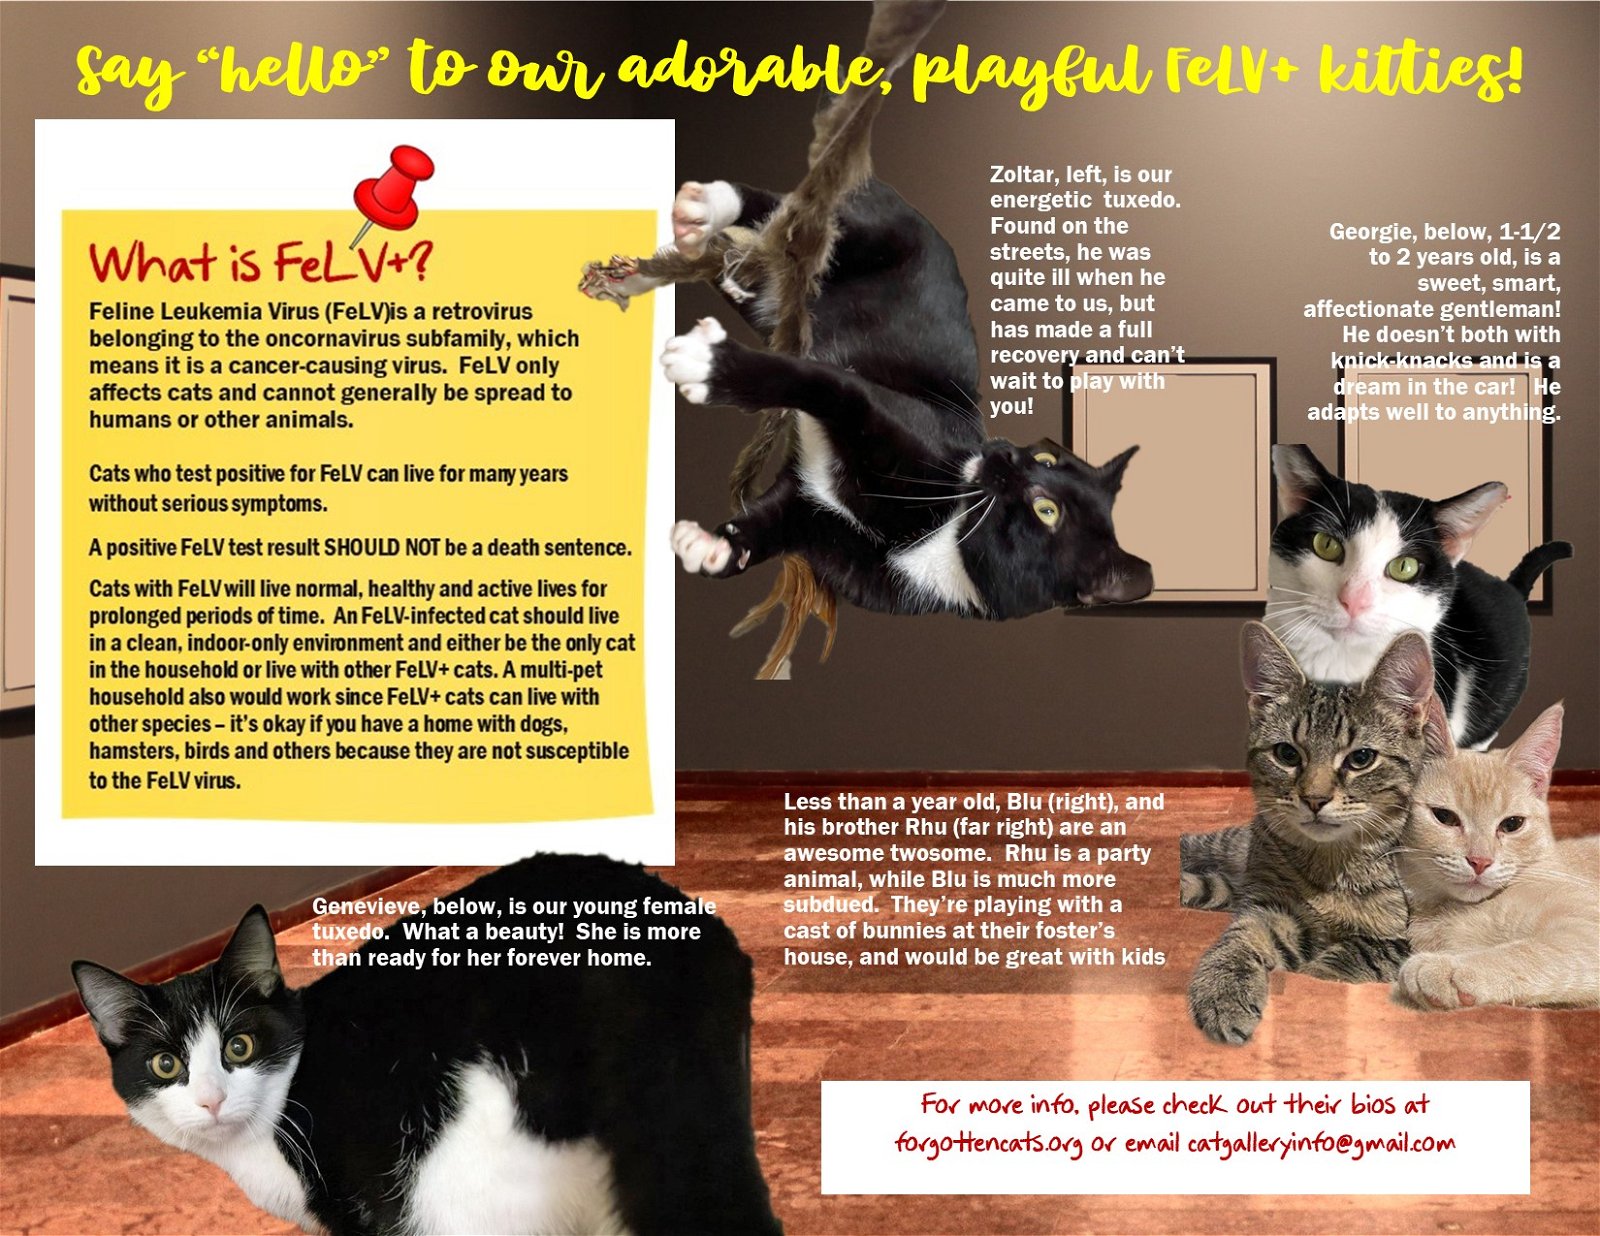 Lovable FeLV+ Kitties